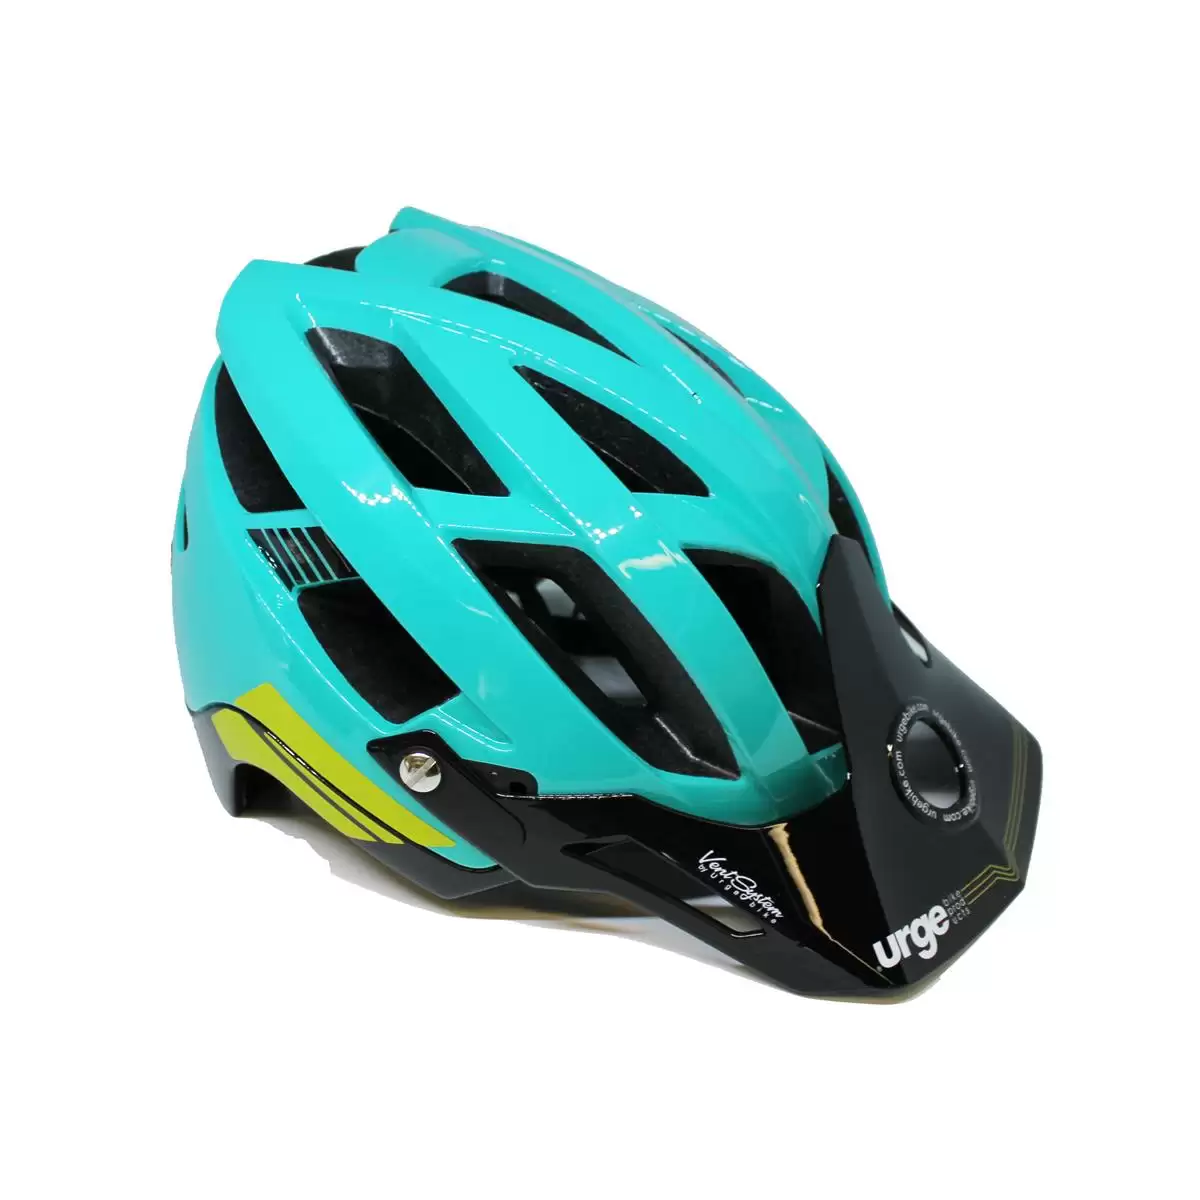 Full face helmet Gringo de la Pampa light blue size L/XL (58-61) #5